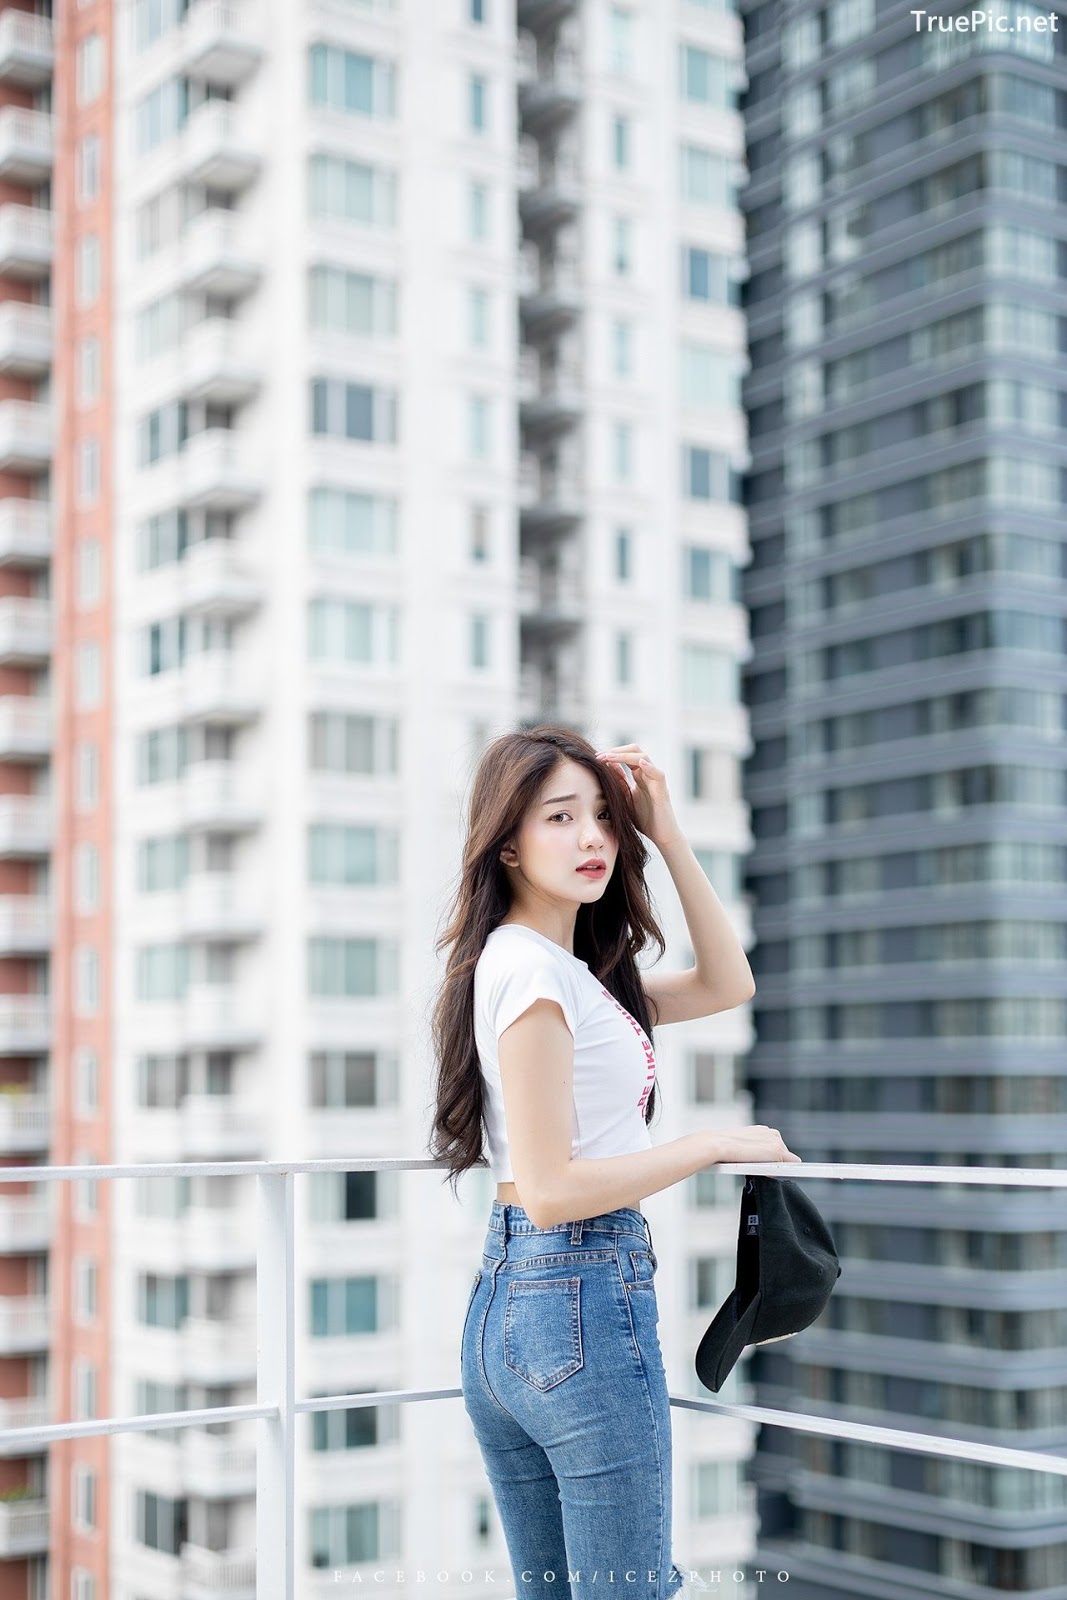 Thailand Pretty Model - Anun Sasinun - Outfit City Walking Tour